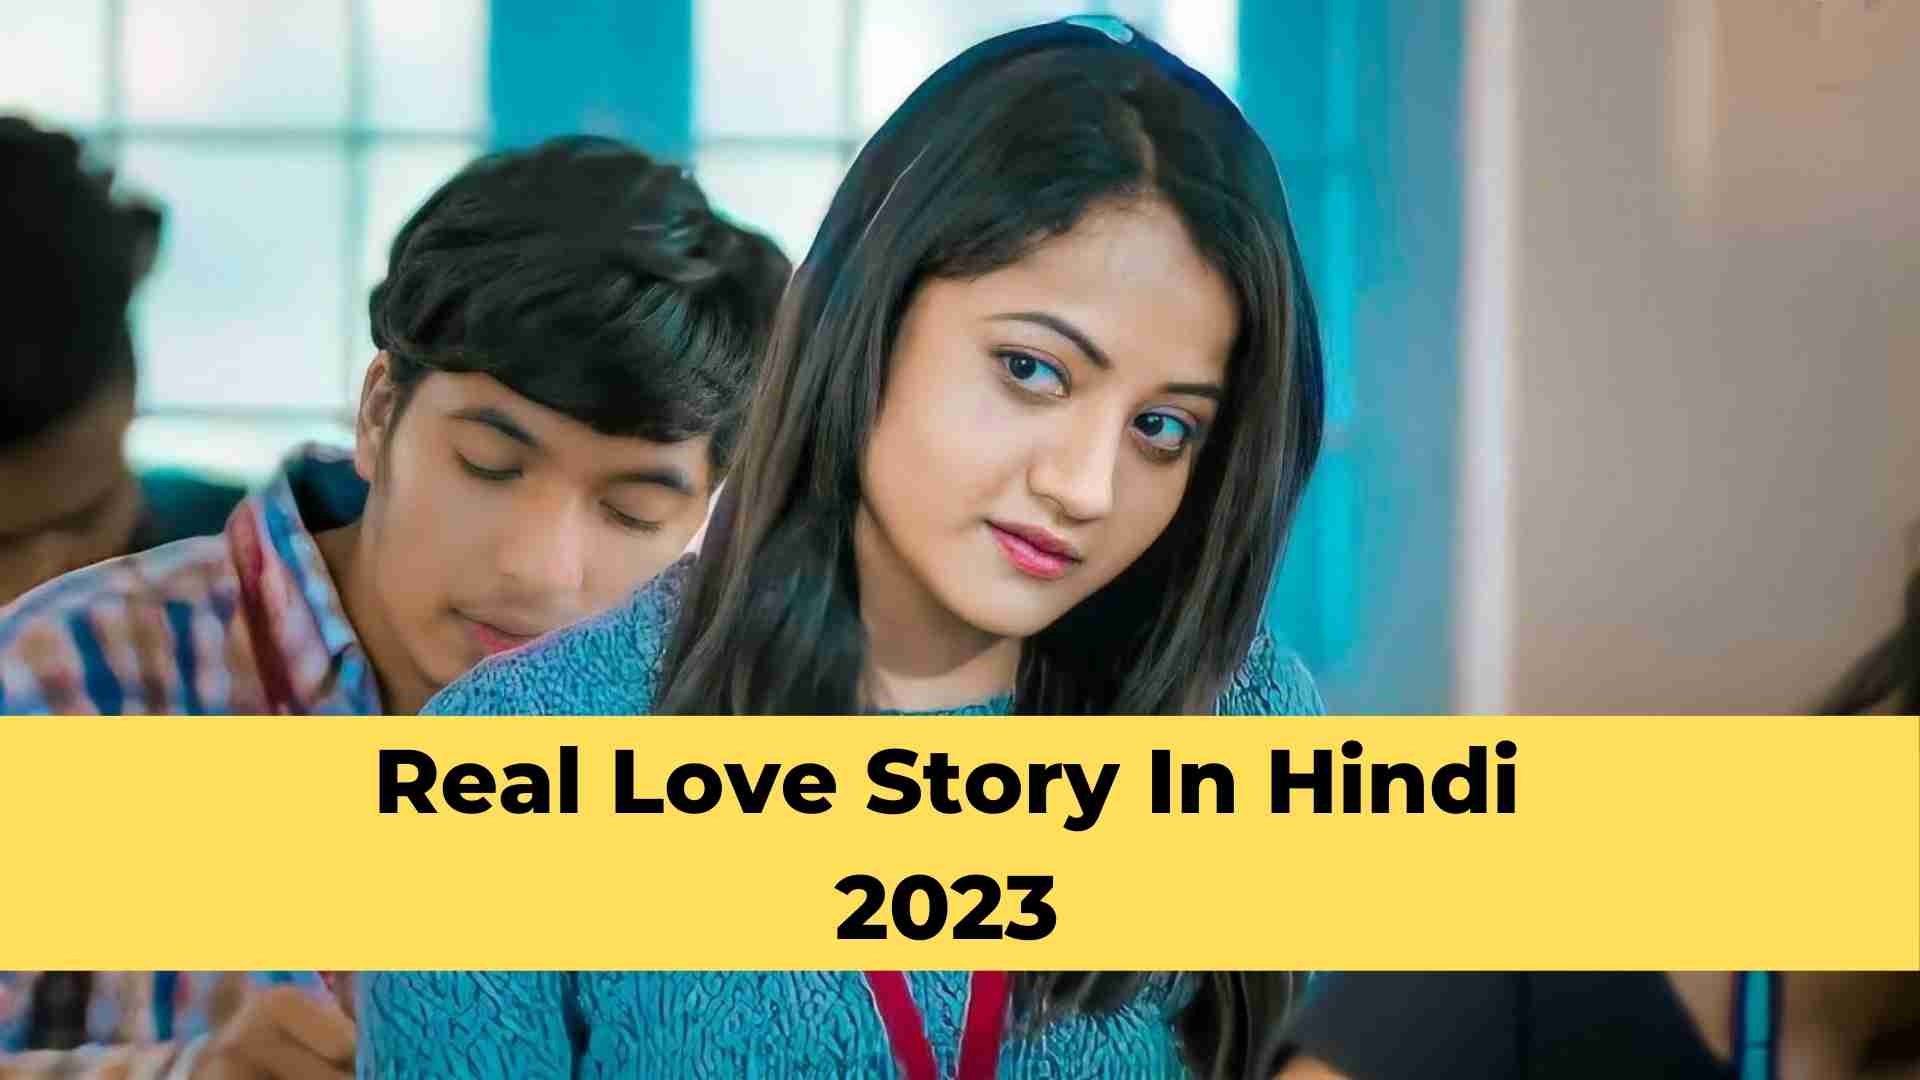 Real Love Story In Hindi 2023